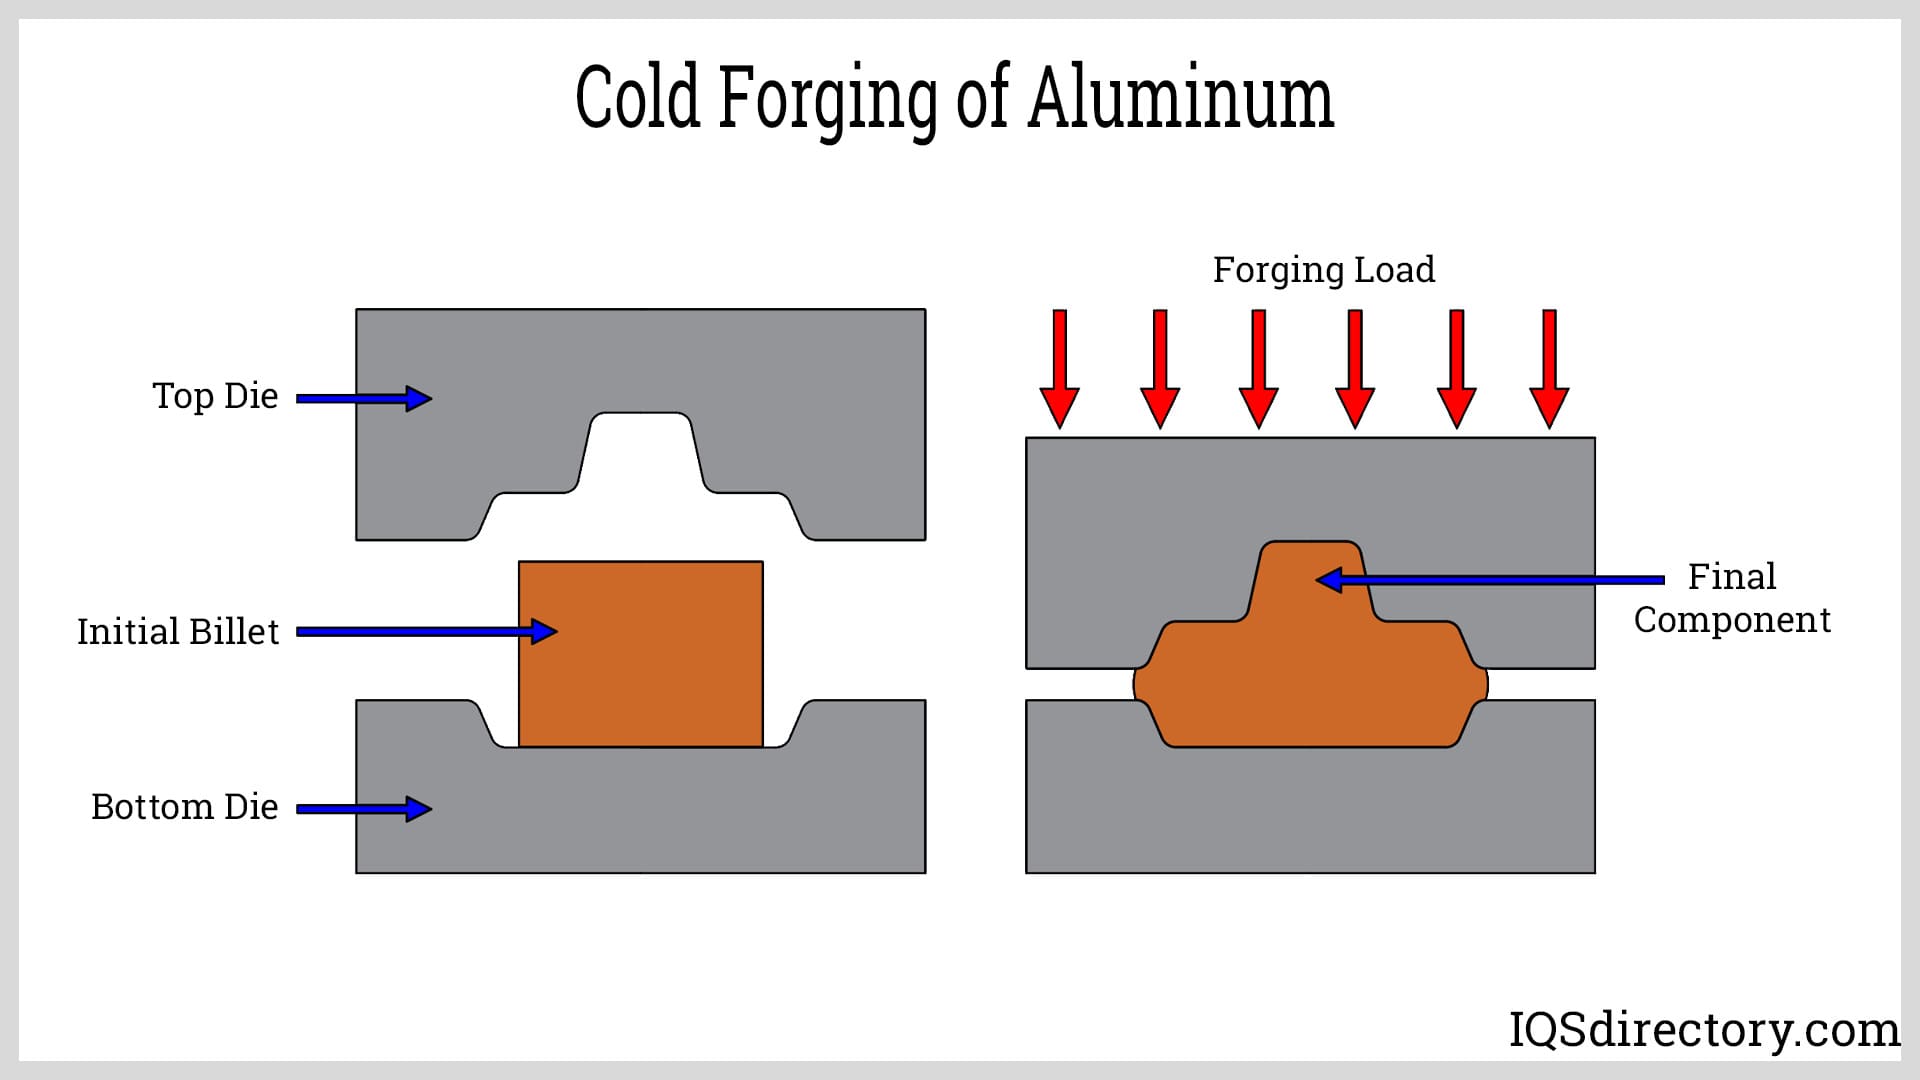 Cold Forging of Aluminum